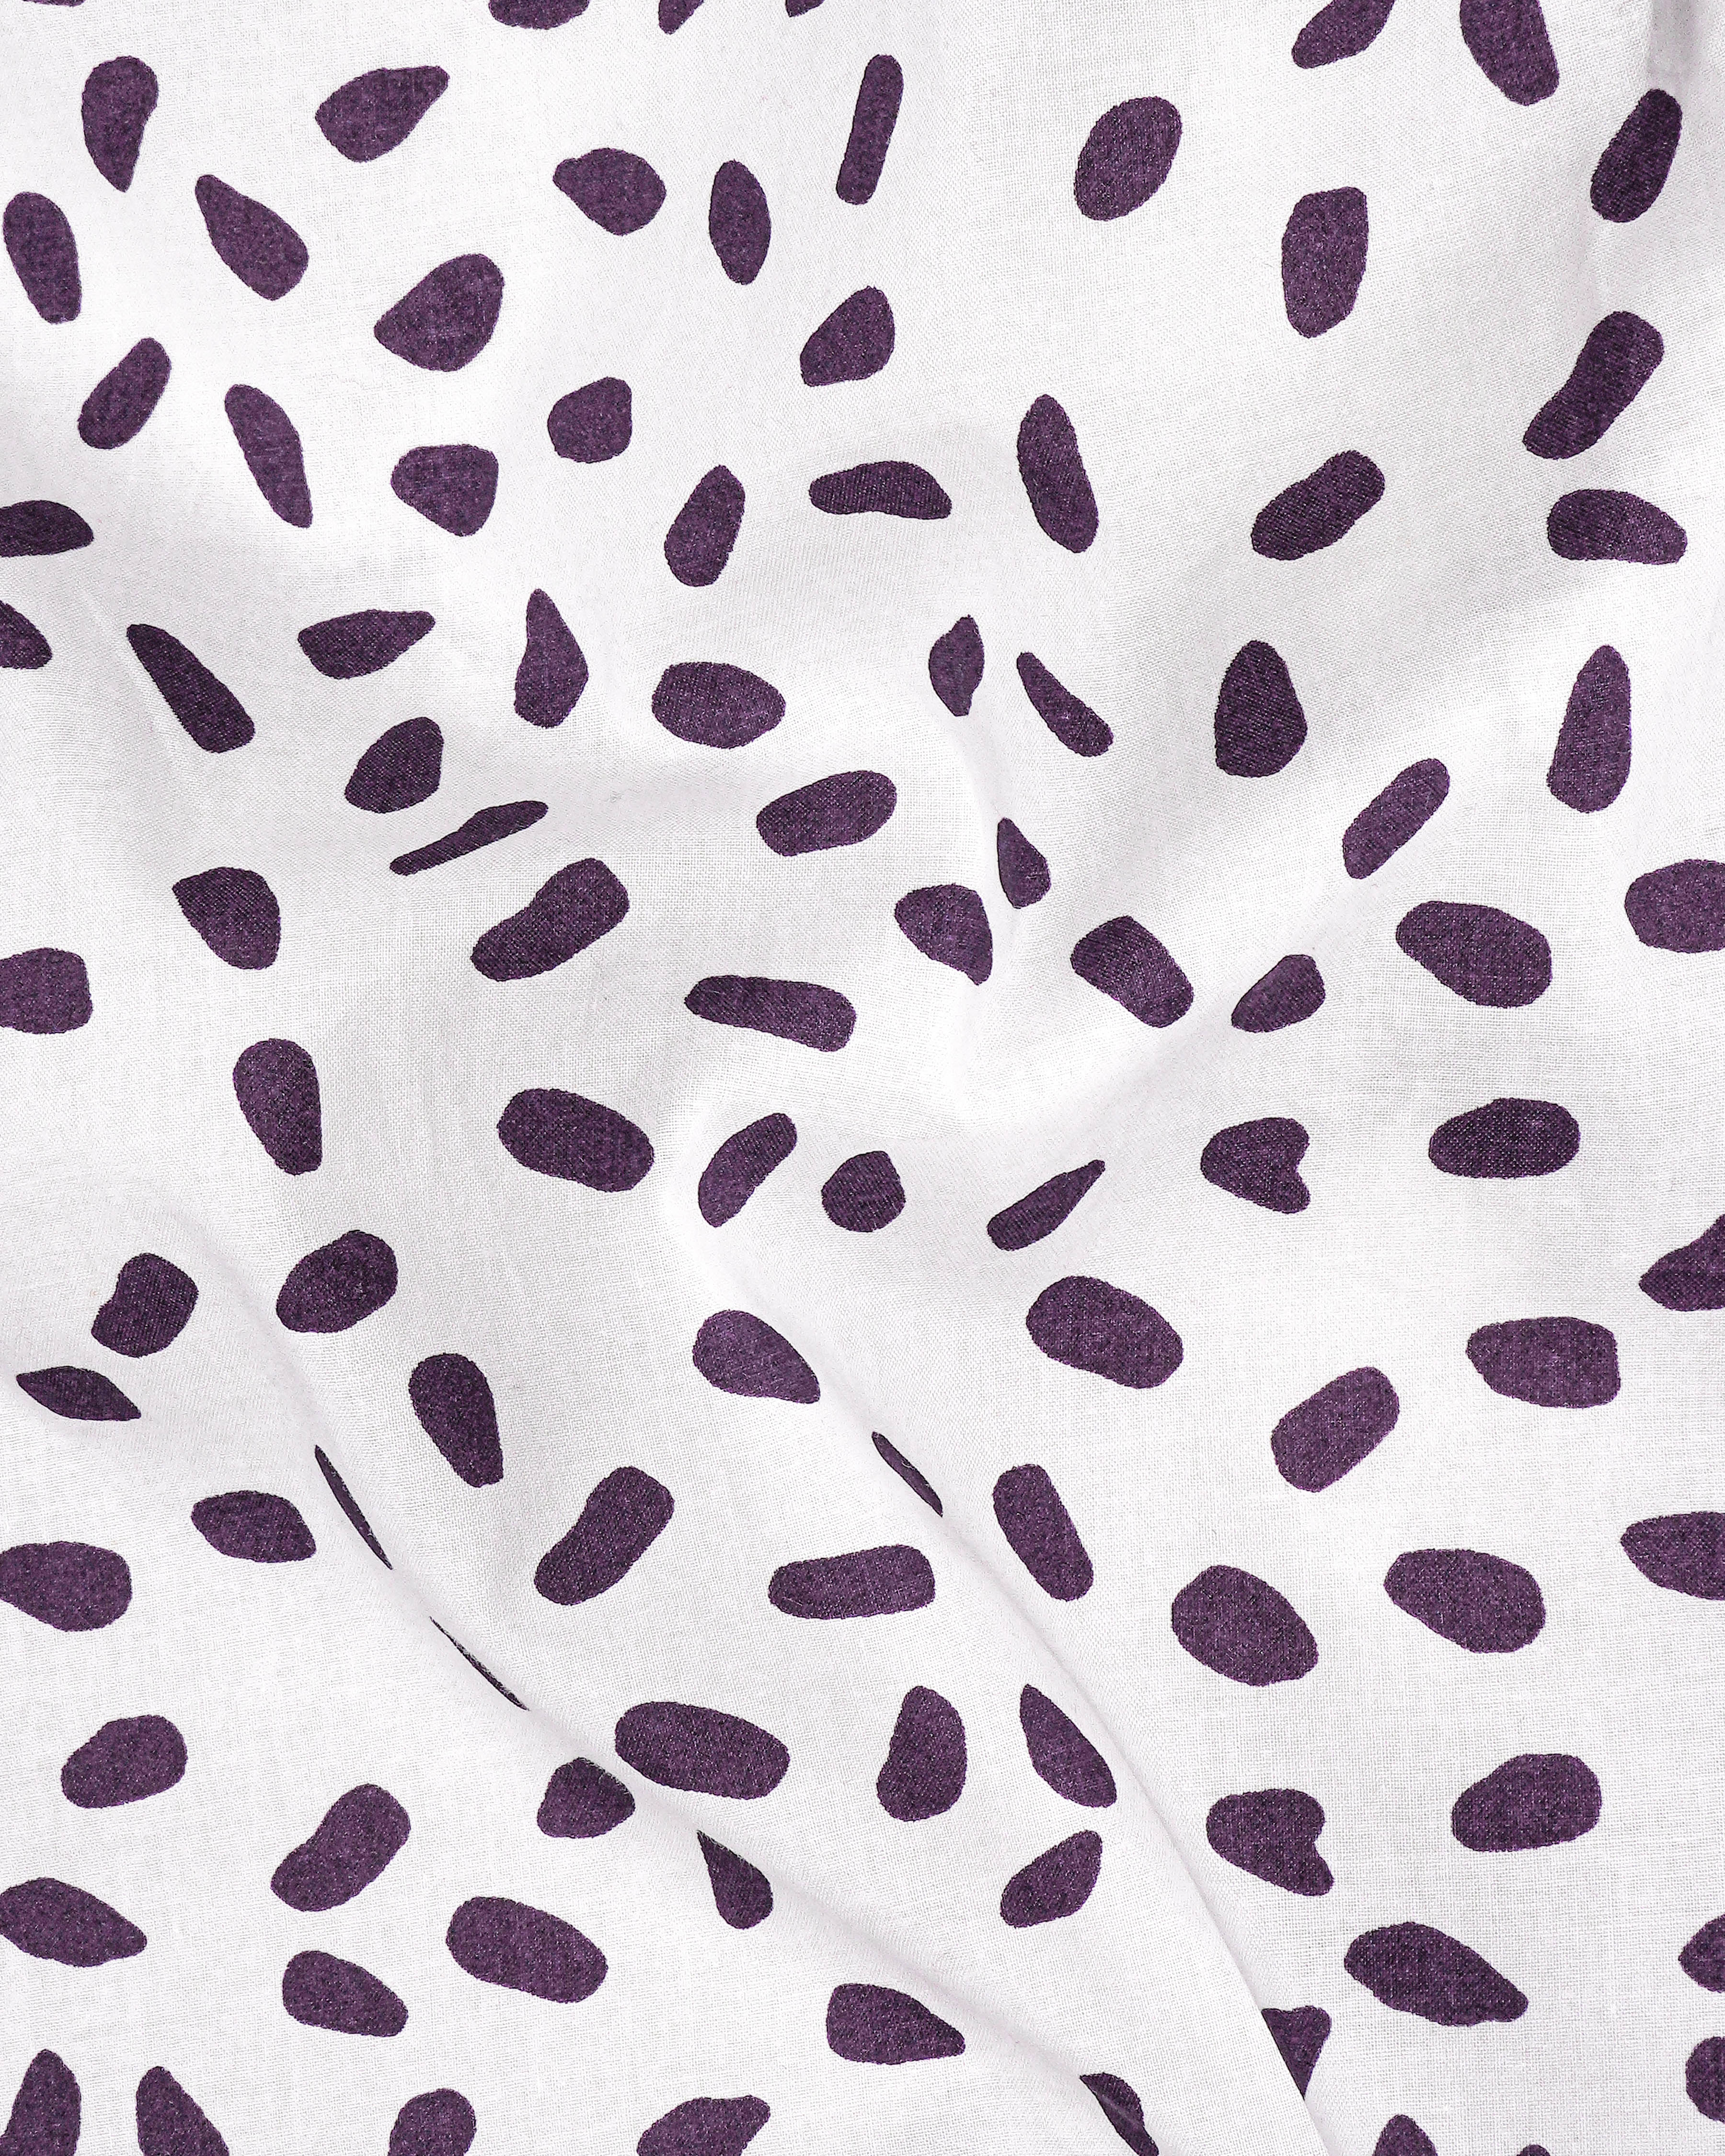 Bright White with Byzantium Purple Printed Premium Cotton Shirt 8391-CC-H-38, 8391-CC-H-39, 8391-CC-H-40, 8391-CC-H-42, 8391-CC-H-44, 8391-CC-H-46, 8391-CC-H-48, 8391-CC-H-50,  8391-CC-H-52